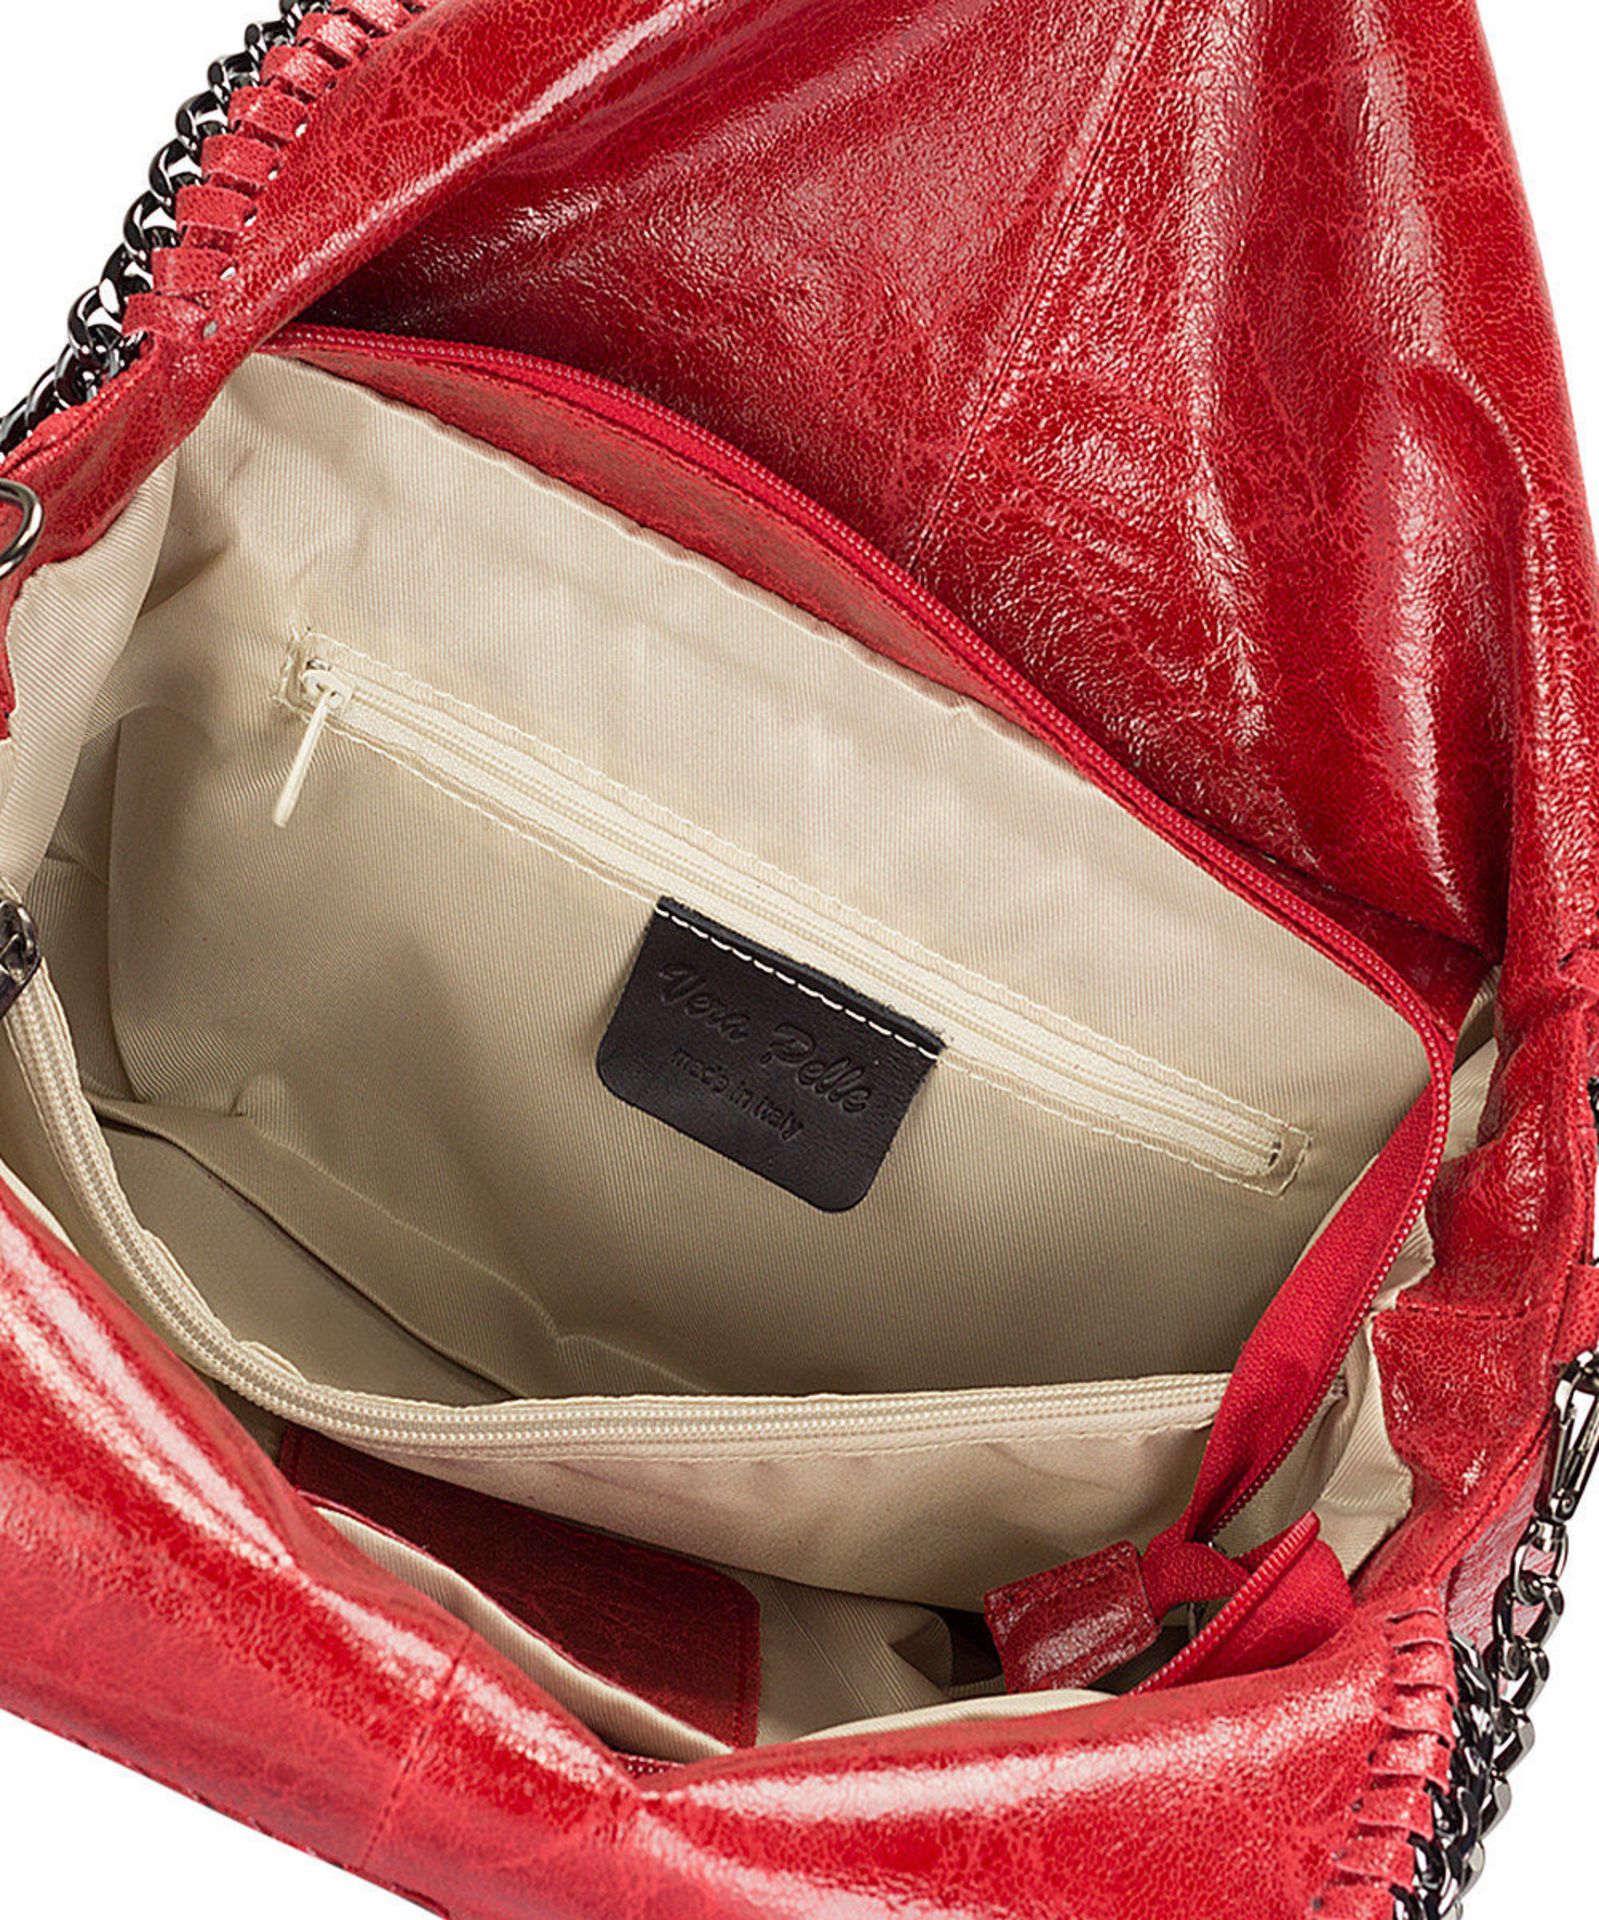 Brand New Markese Bordo Chain Suede Hobo Handbag (Ref: 35035912 BAG SHELF) - Image 4 of 4